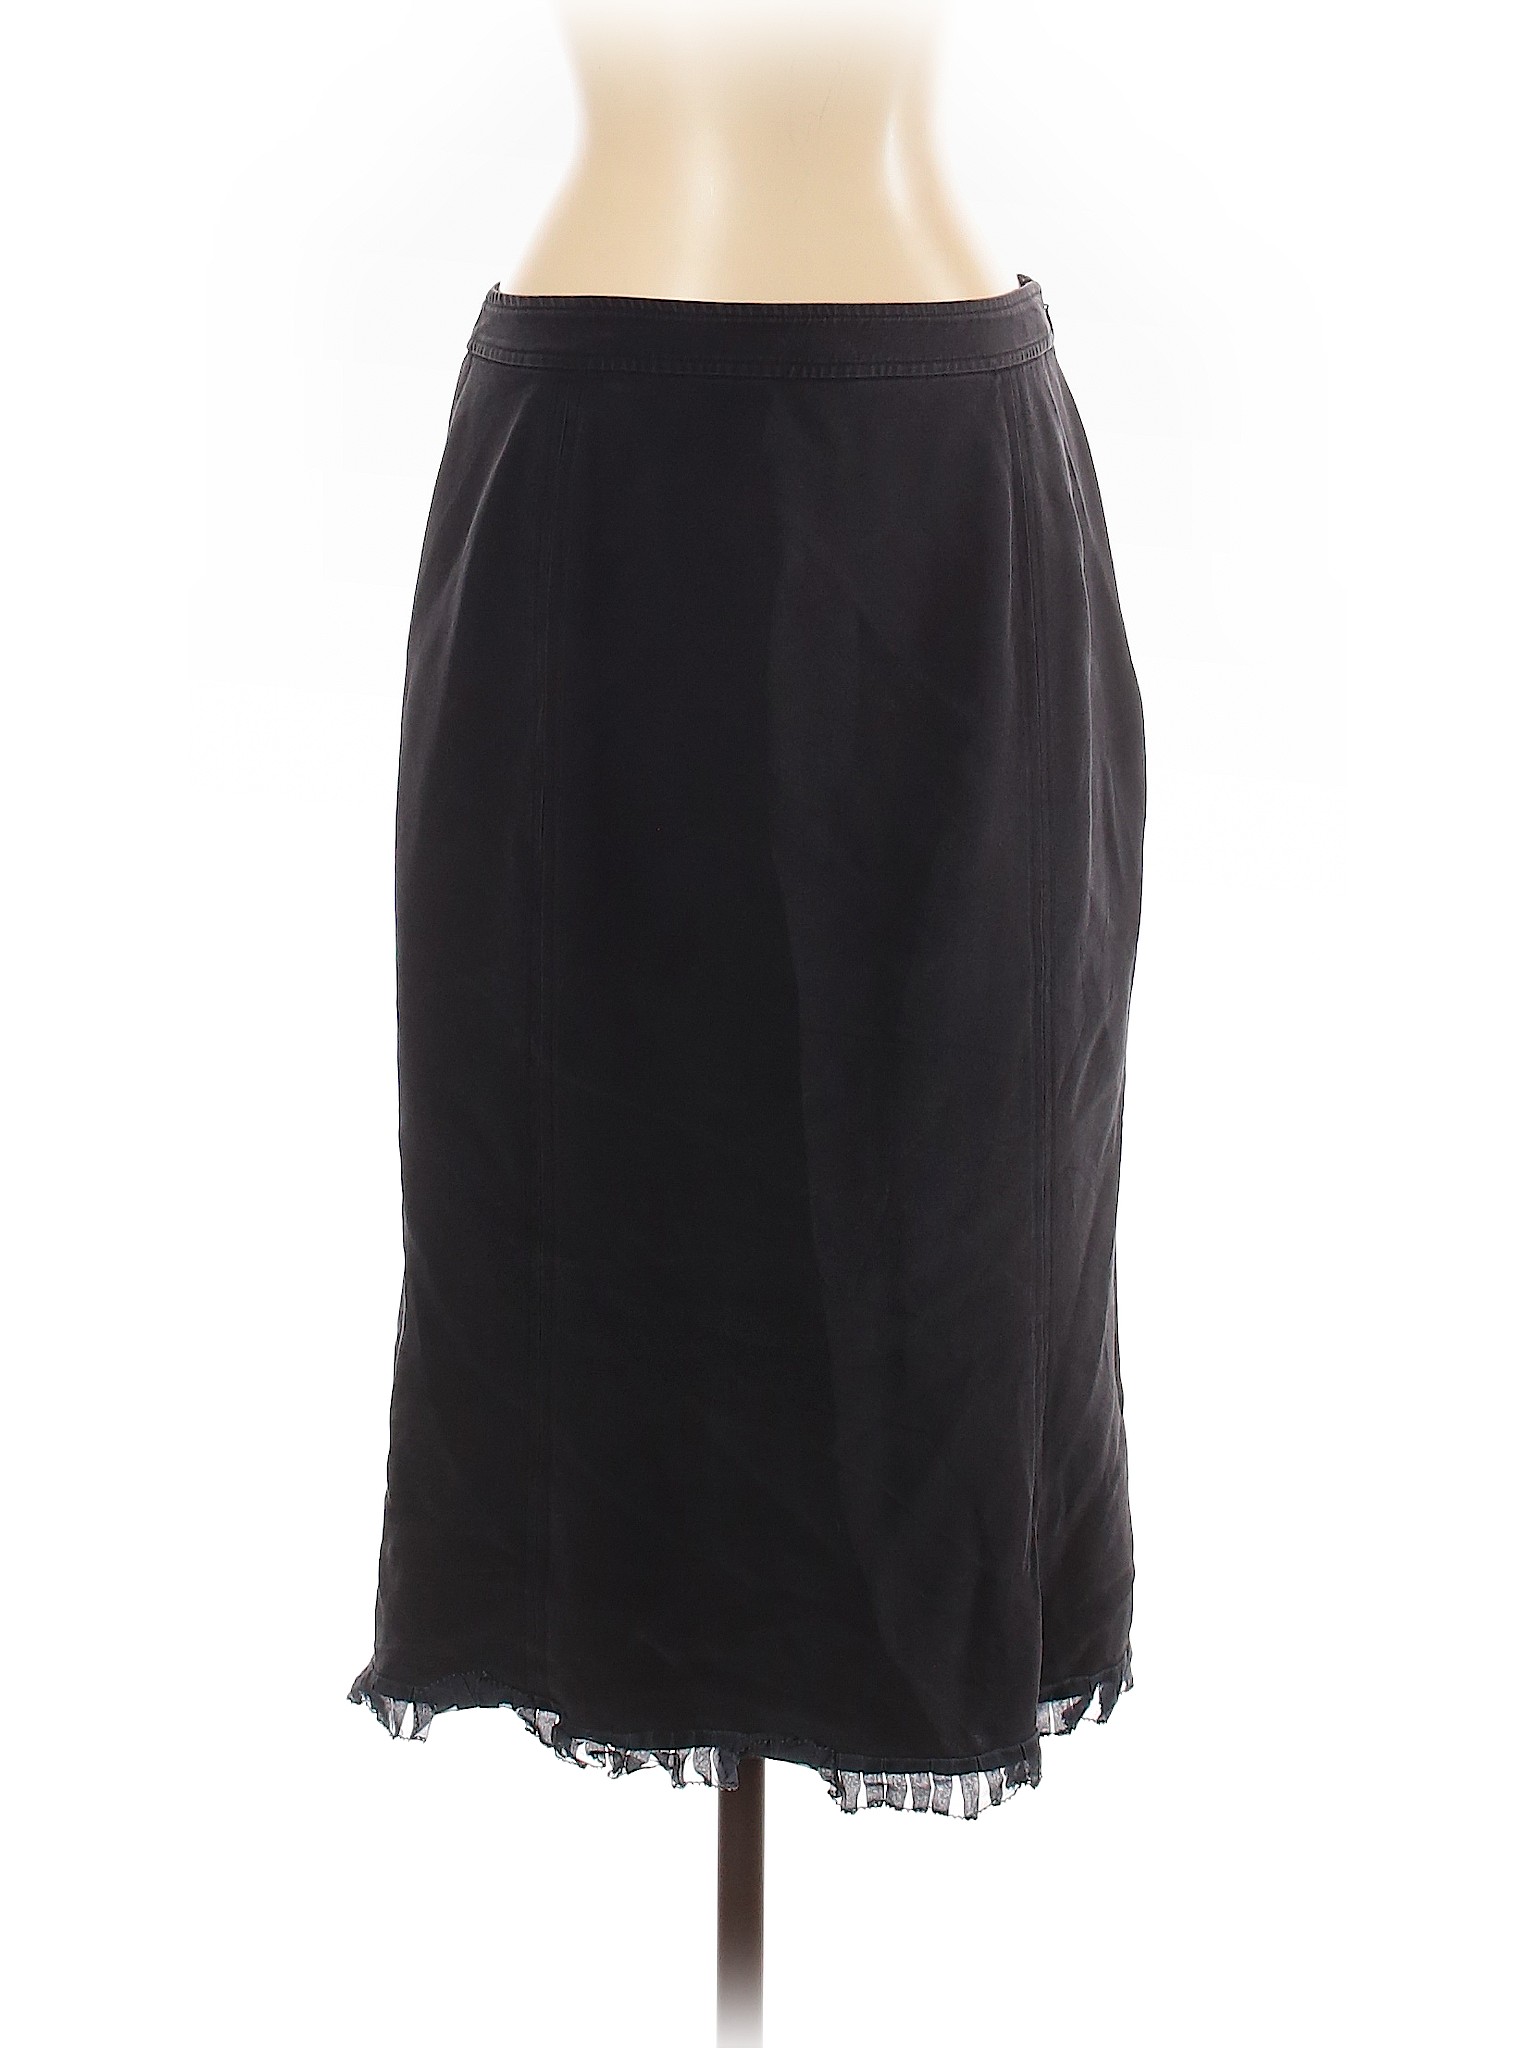 Collection Women Black Silk Skirt 4 | eBay